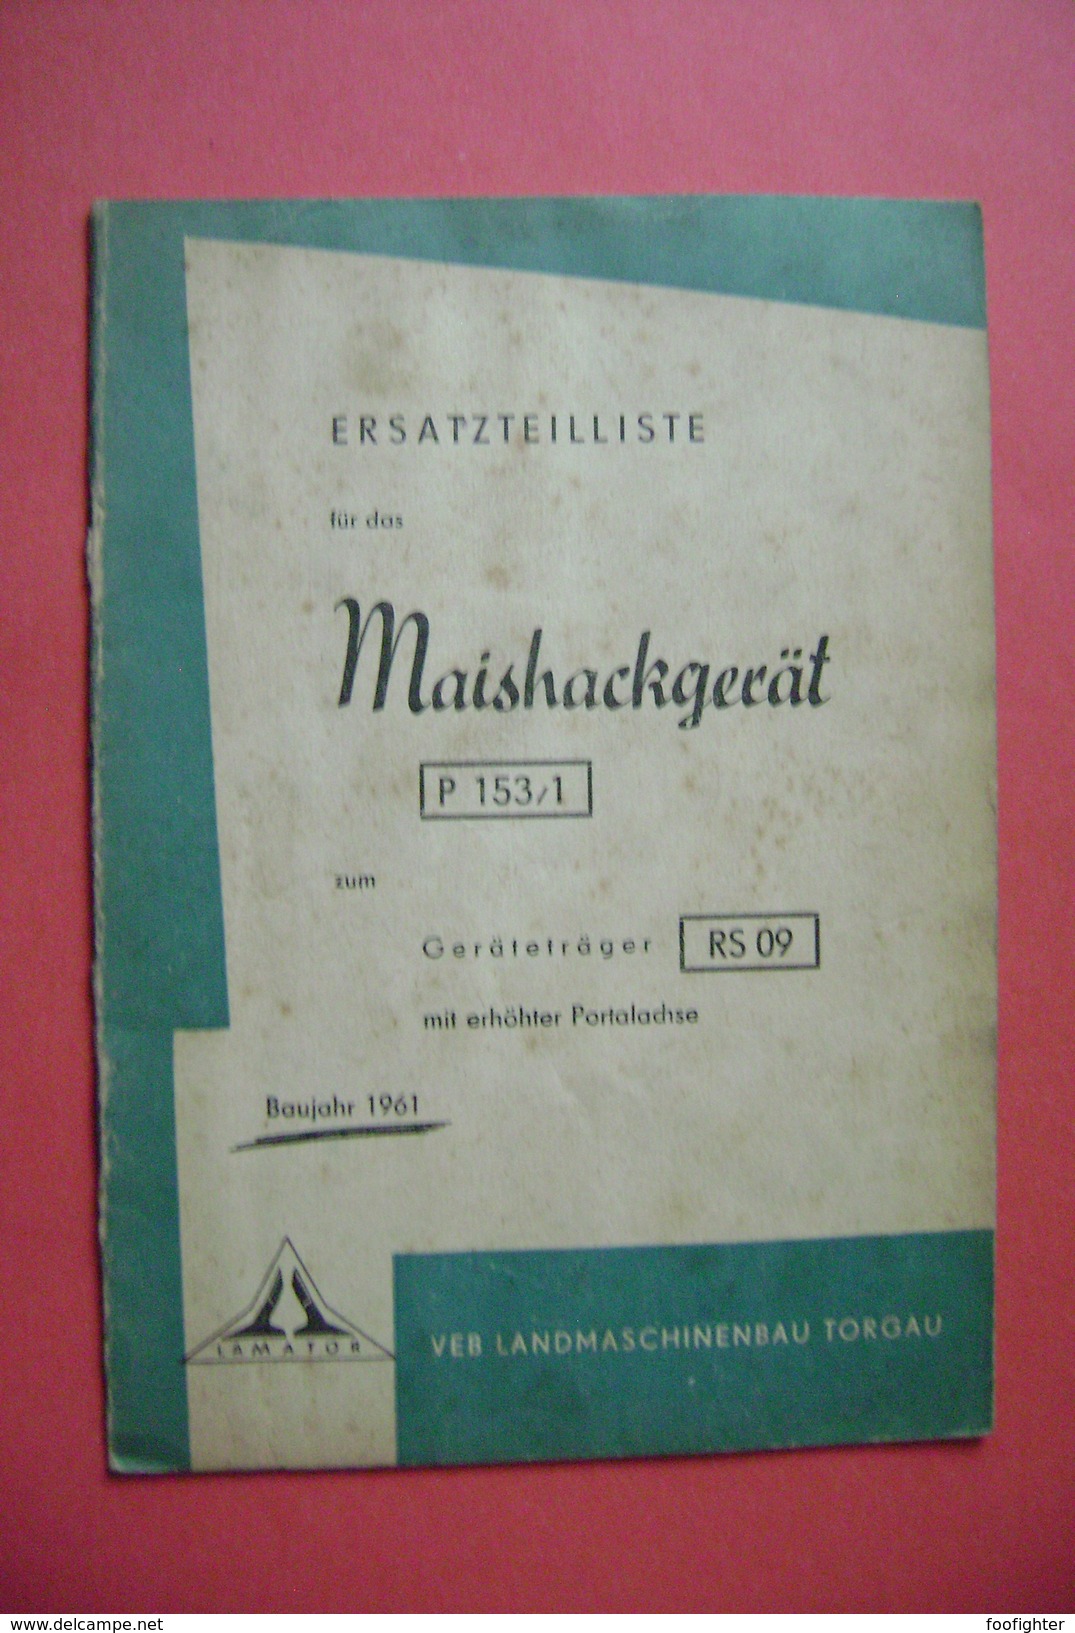 Ersatzteiliste Für Das MAISHACKGERÄT P 153/1 Zum Geräteträger RS 09 - VEB Landmaschinenbau Torgau DDR 1961 - Catalogi